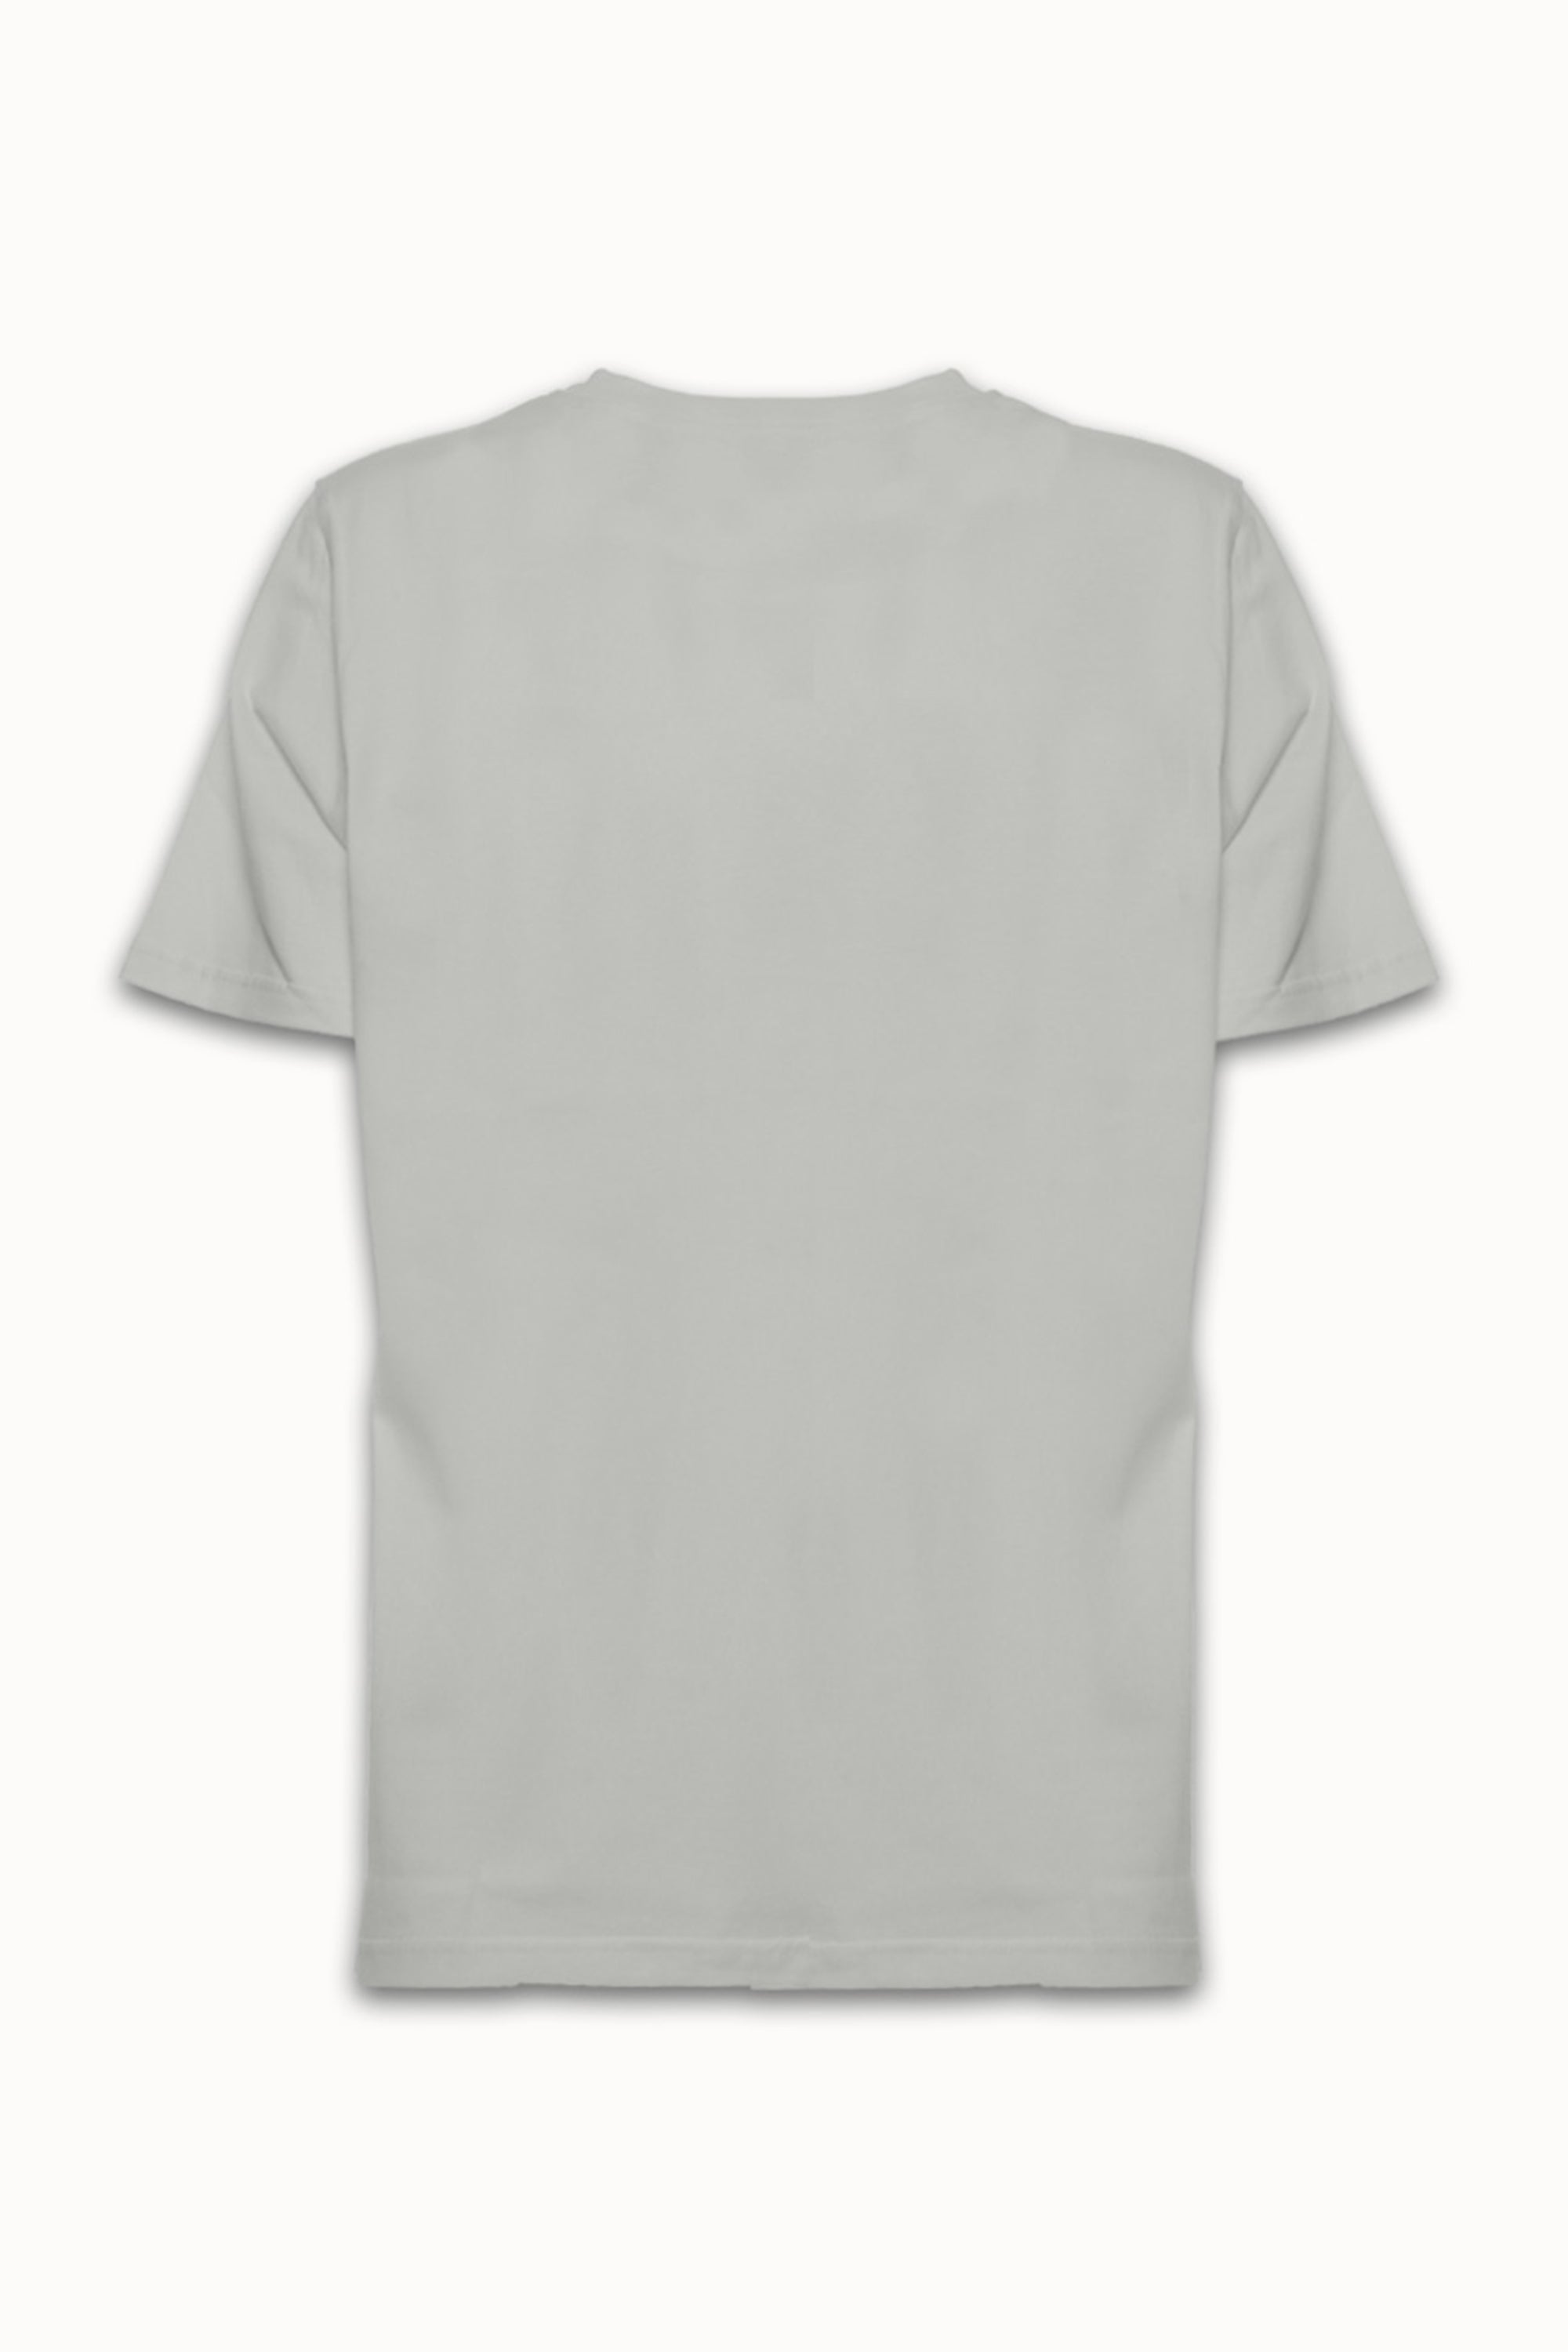 T-Shirt Symbol